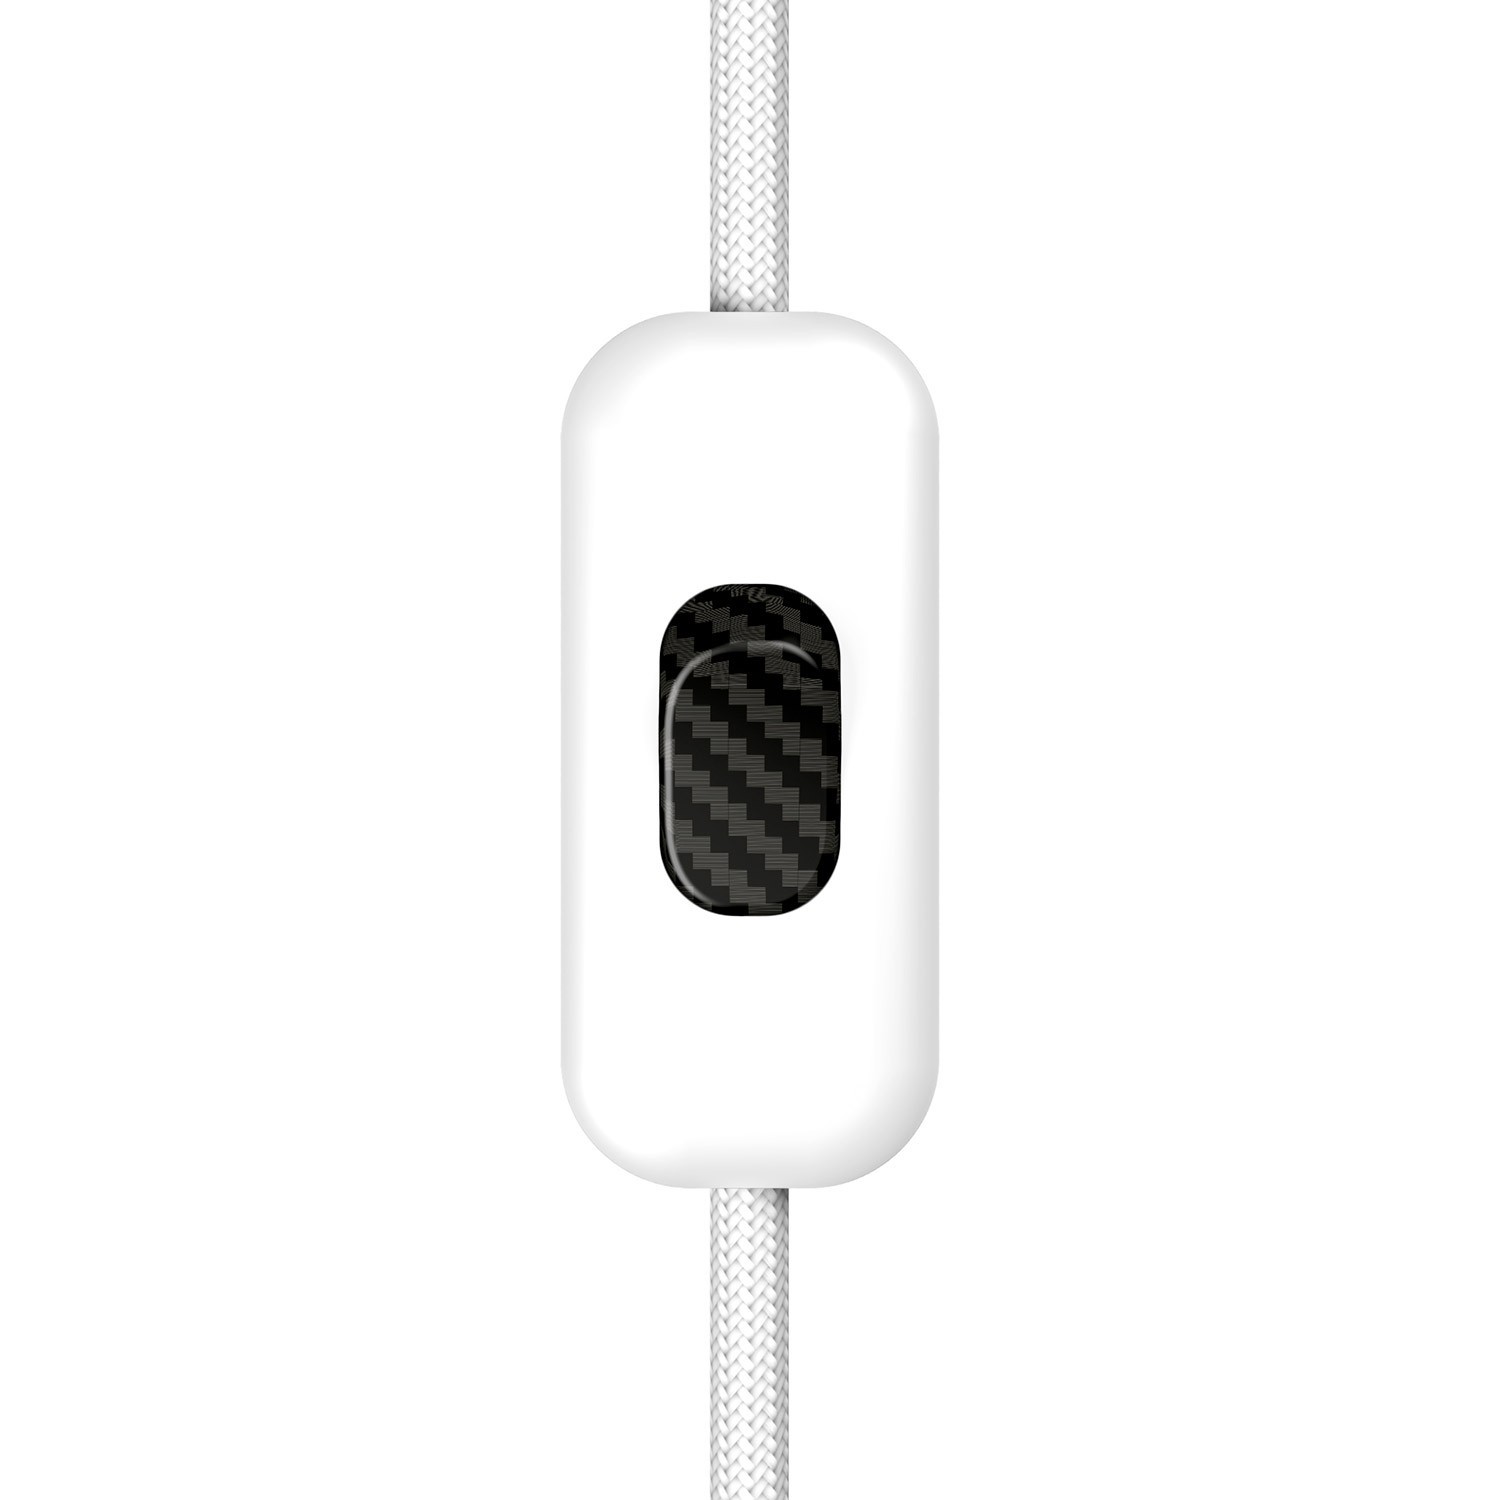 Inline single-pole switch Creative Switch White